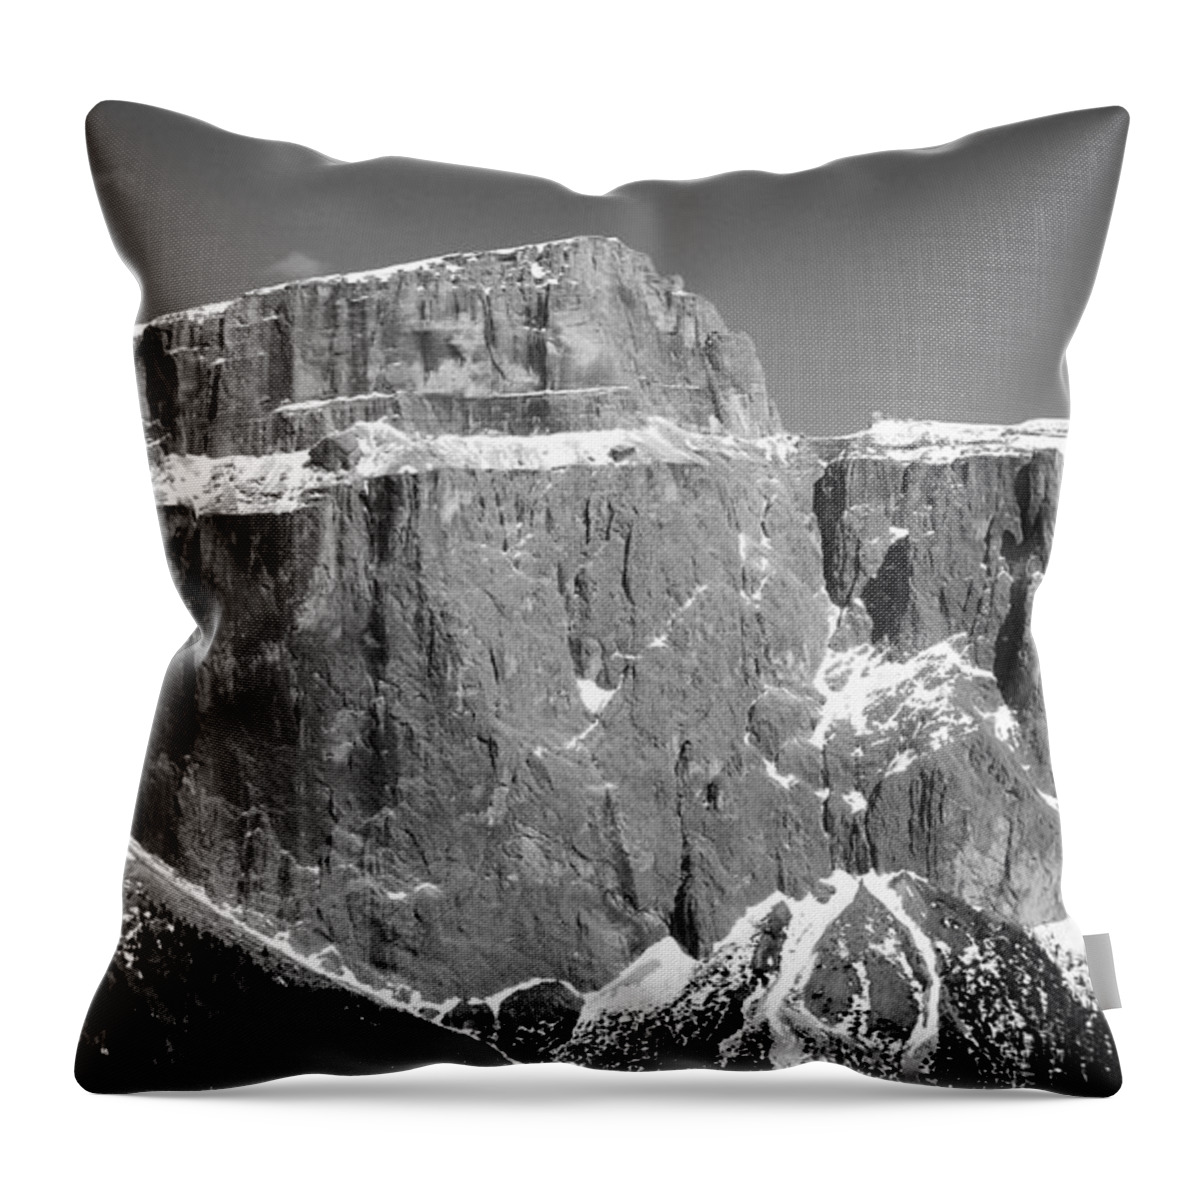 Europe Throw Pillow featuring the photograph Pordoi Joch - Italy by Juergen Weiss